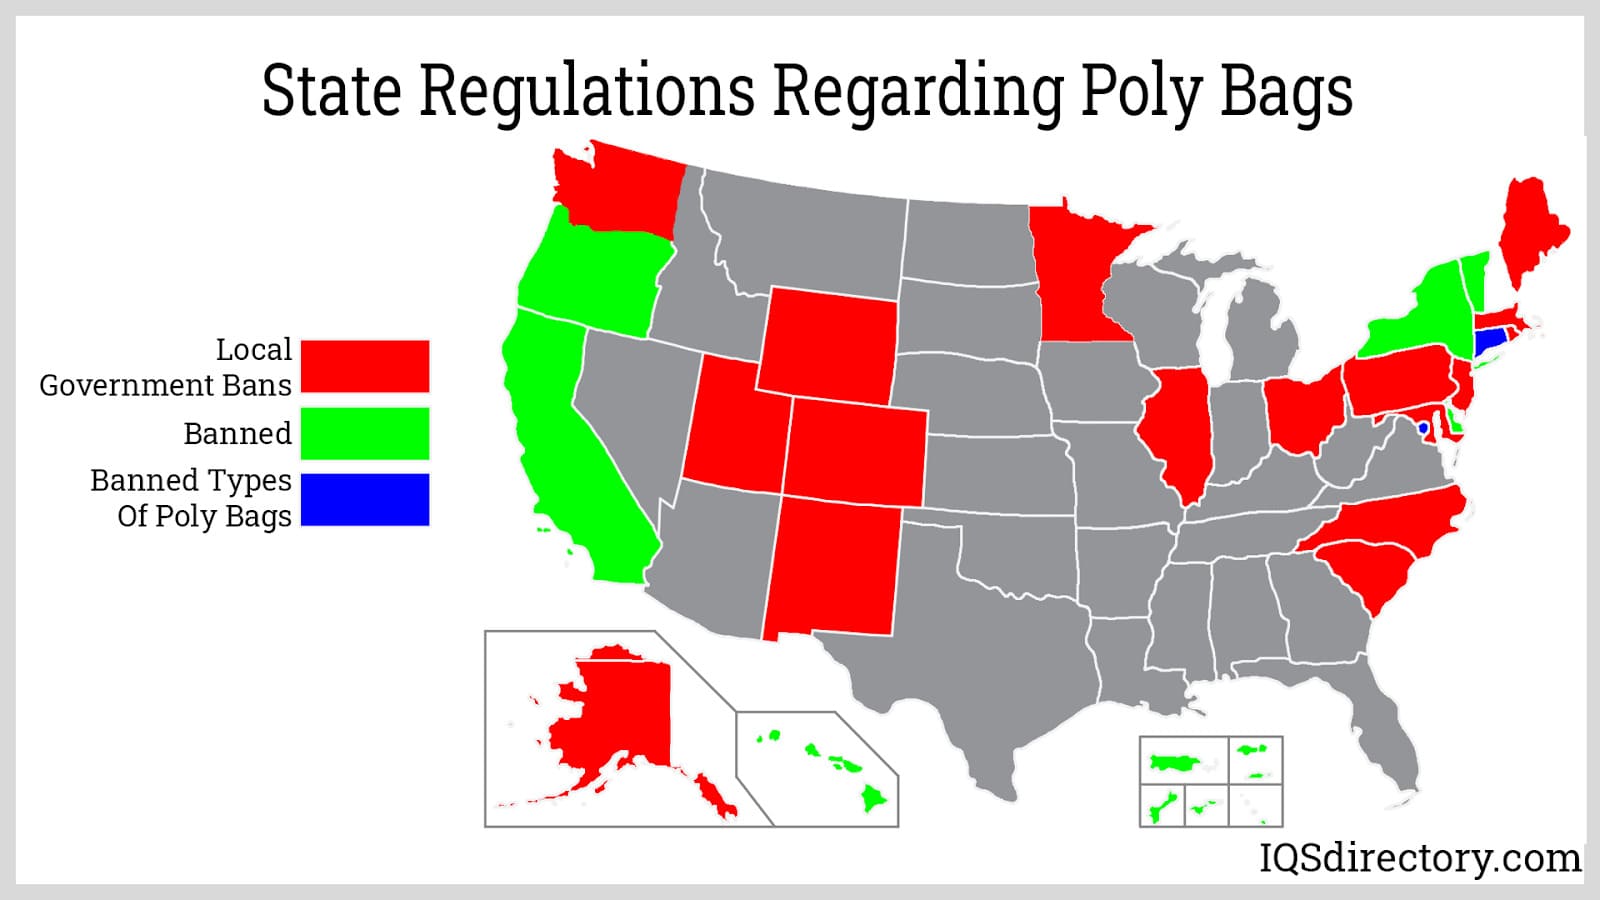 State Regulations Regarding Poly Bags